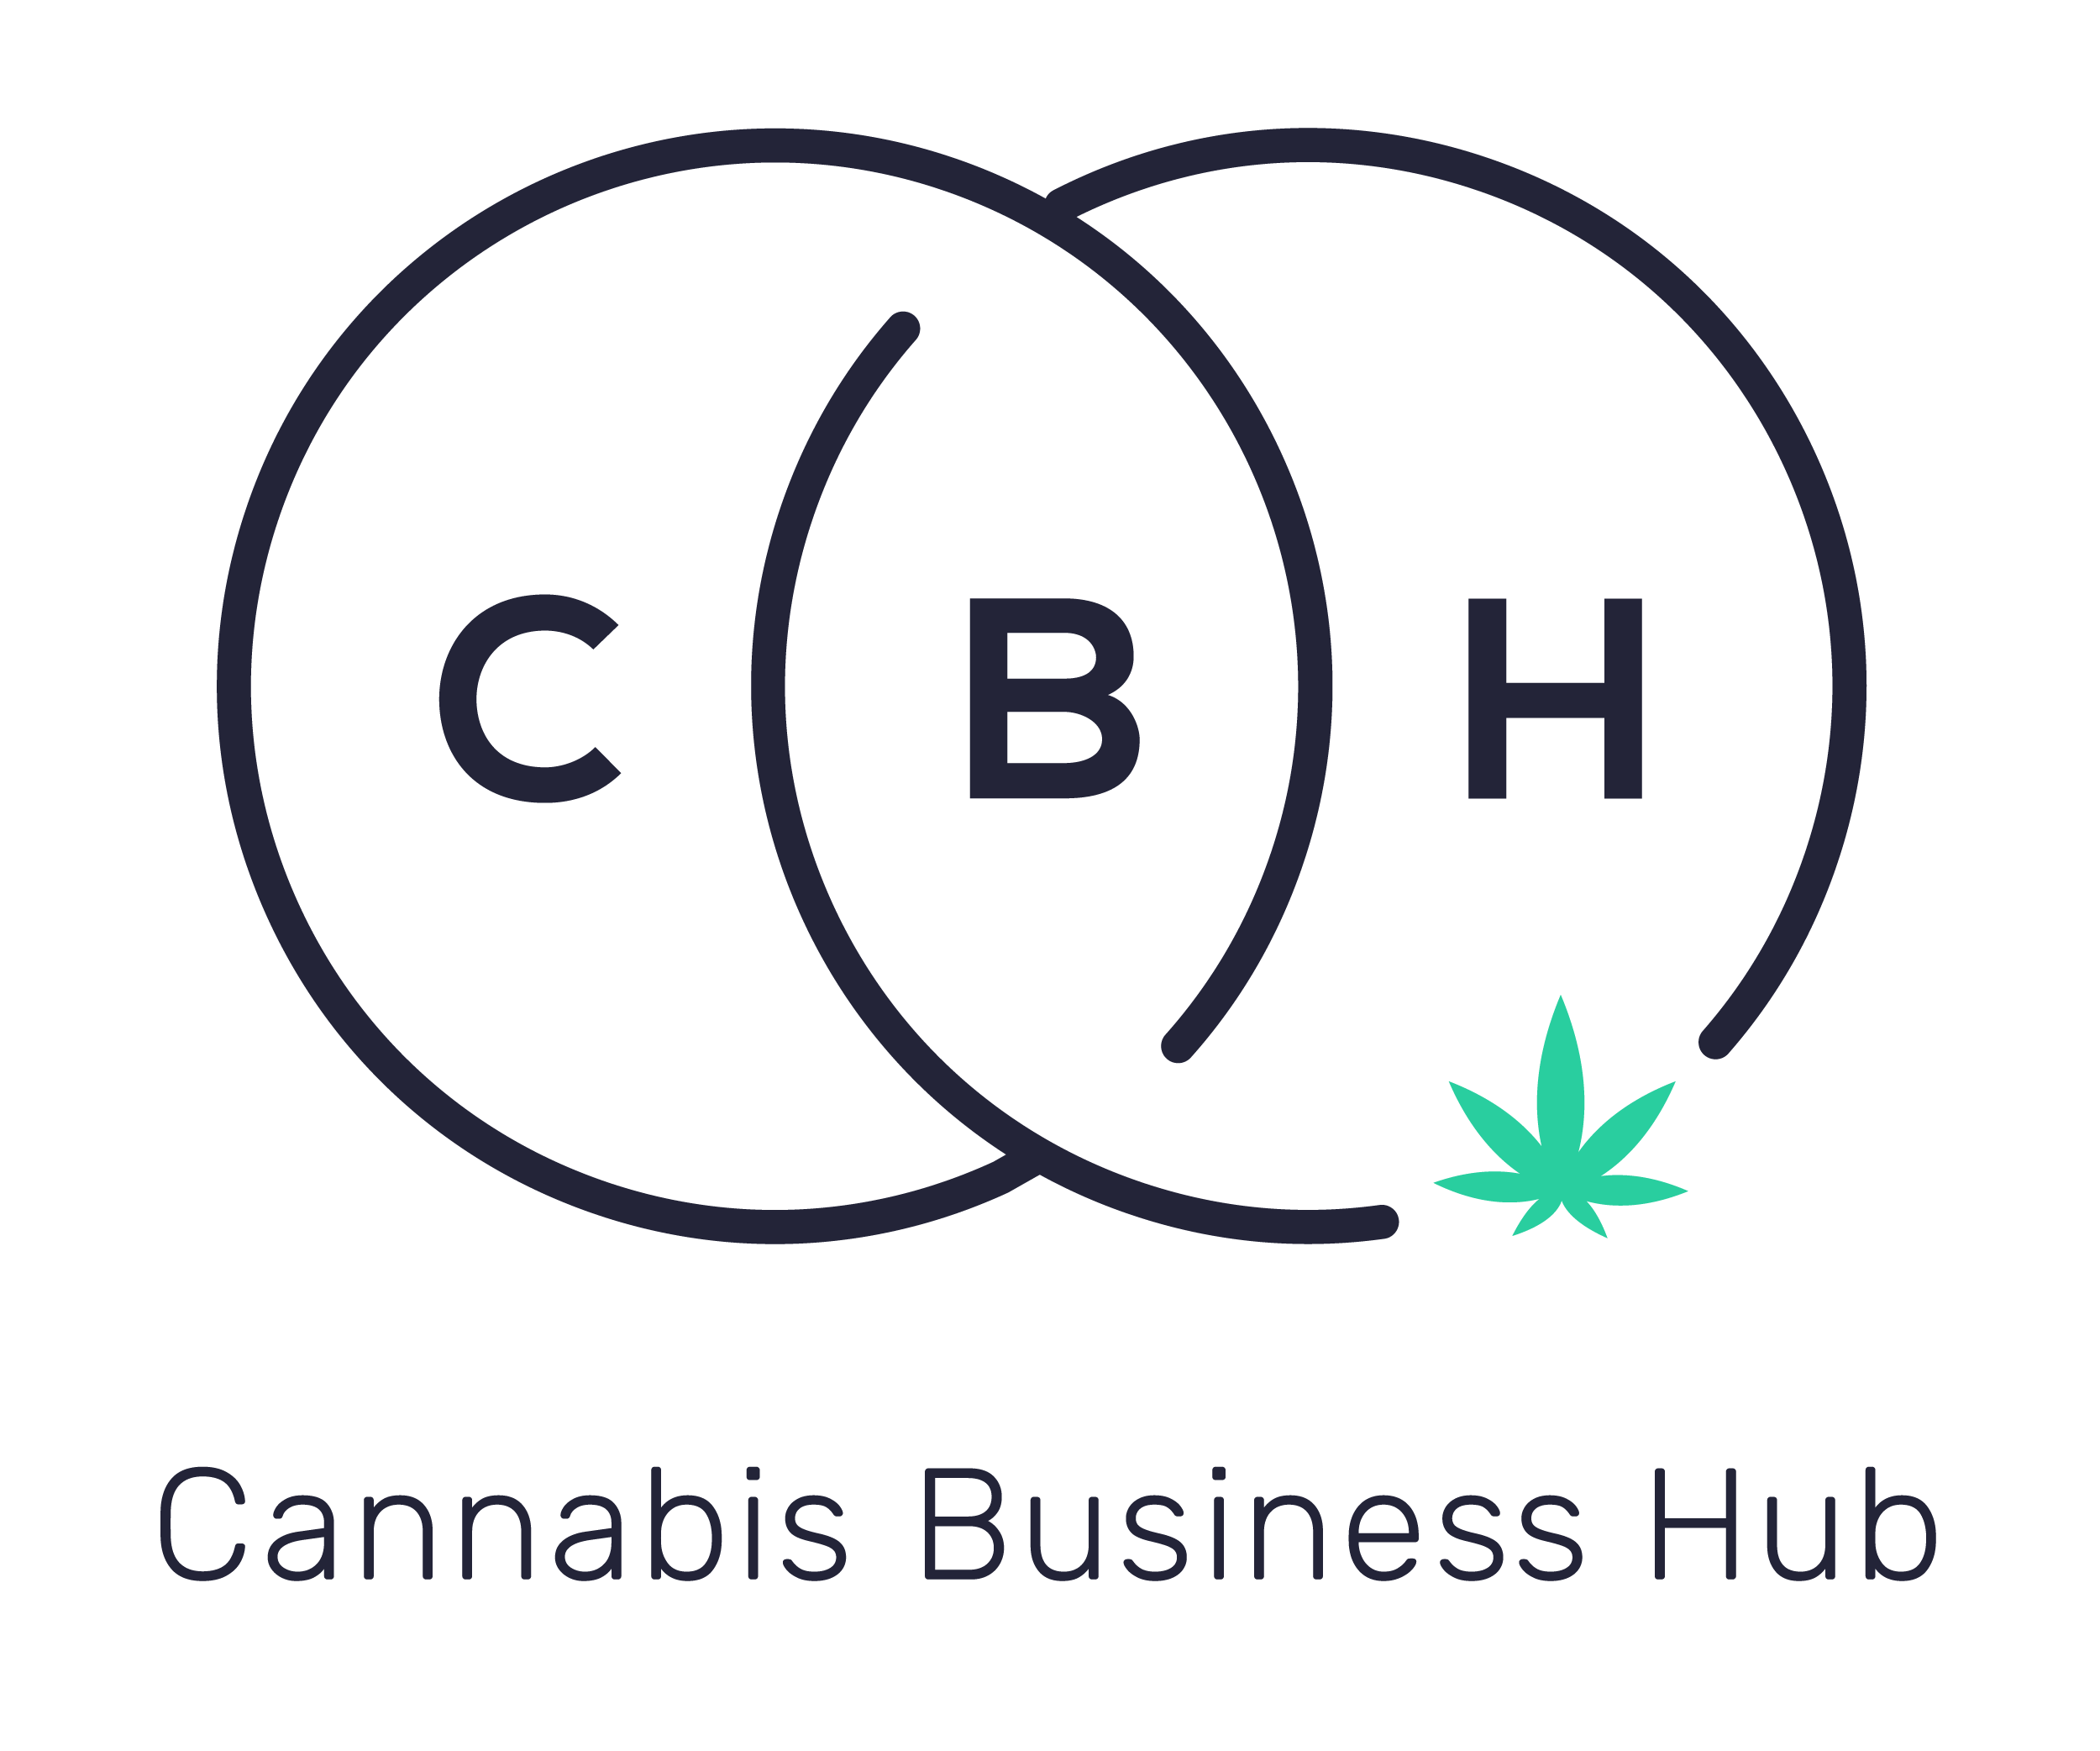 (c) Cannabisbusinesshub.com